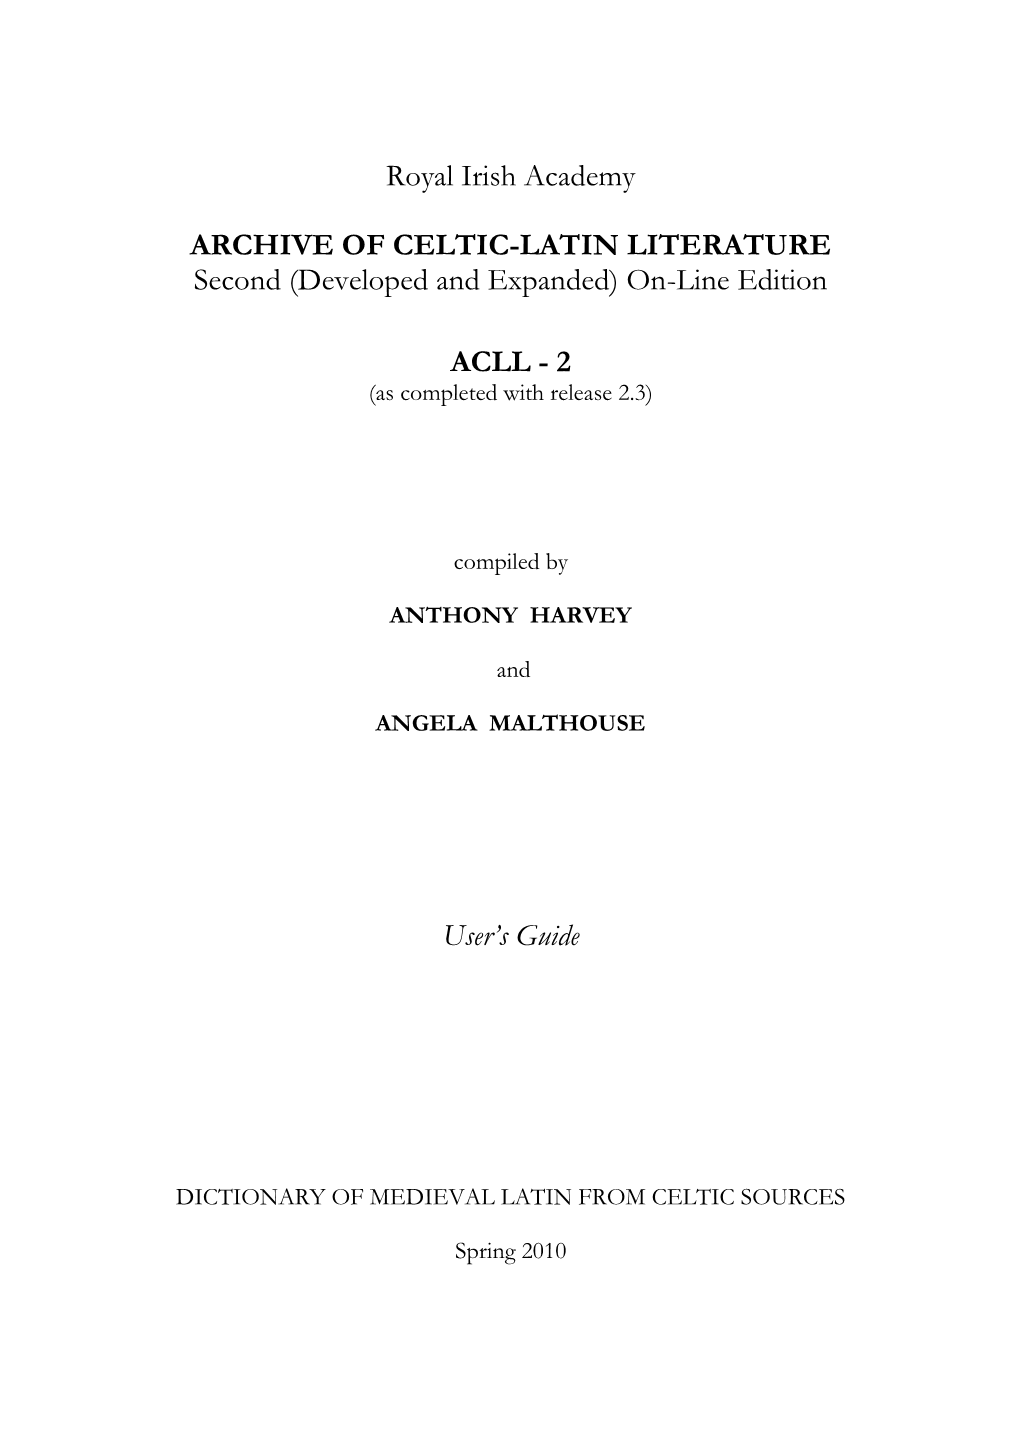 Royal Irish Academy ARCHIVE of CELTIC-LATIN LITERATURE Second